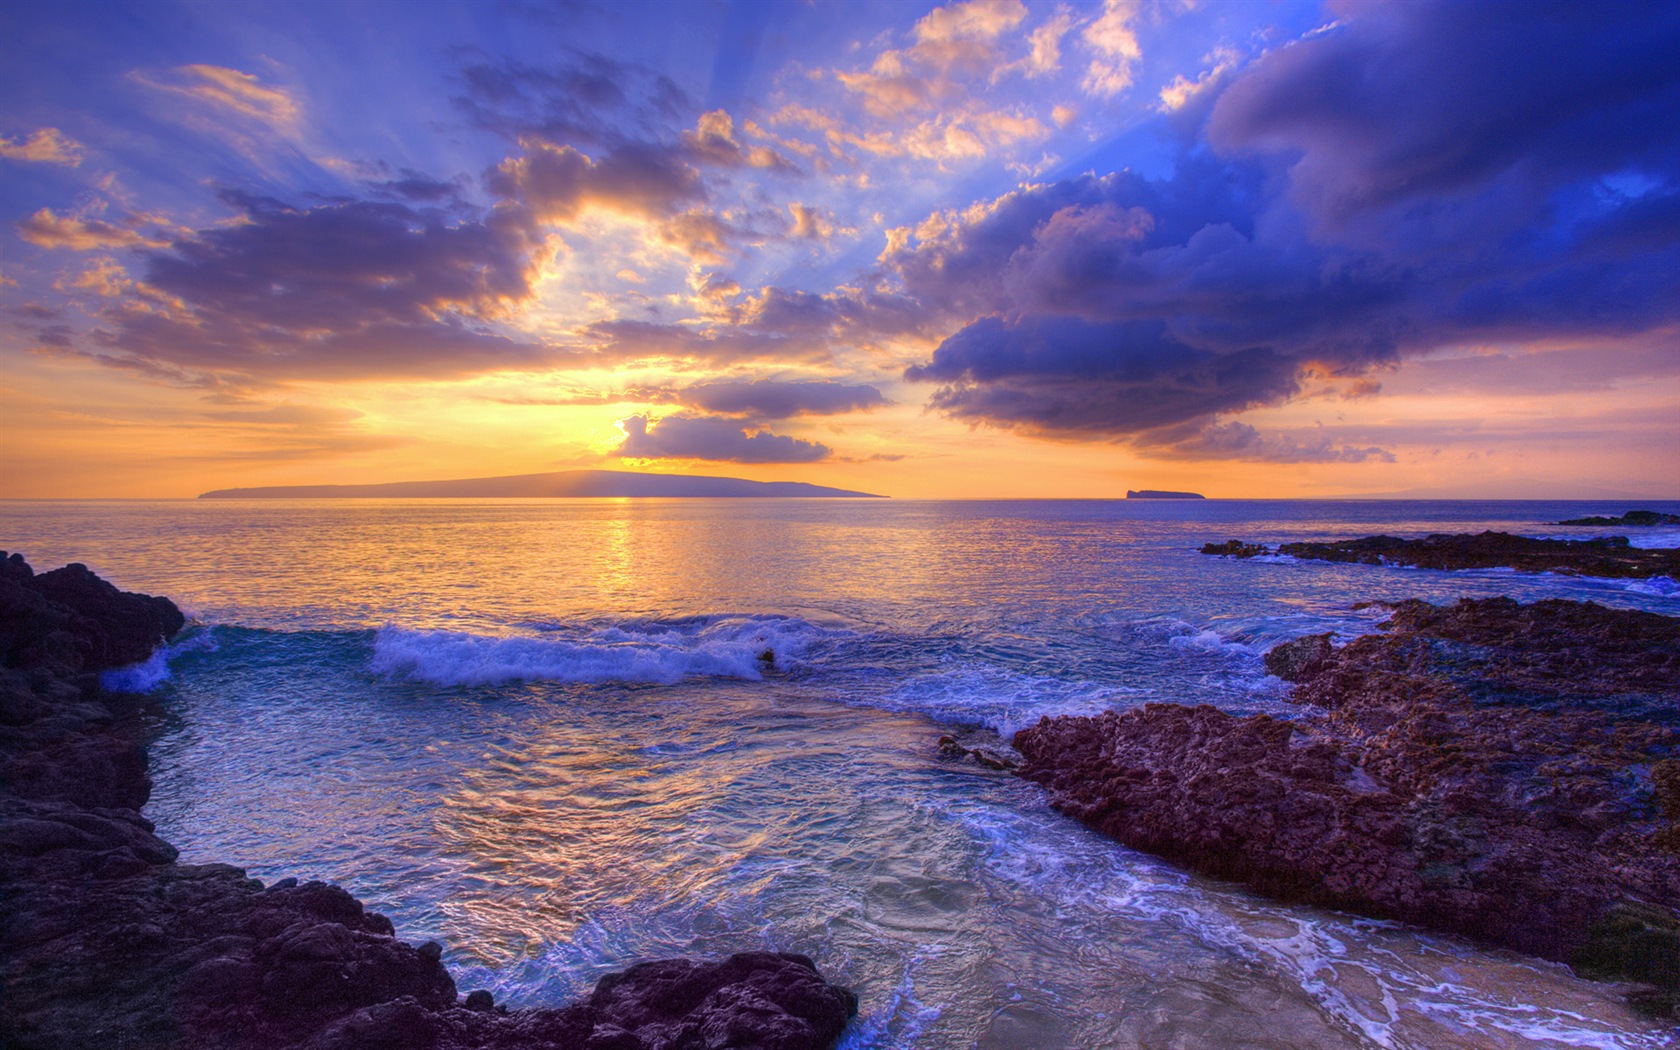 Windows 8 theme wallpaper: Beach sunrise and sunset views #2 - 1680x1050